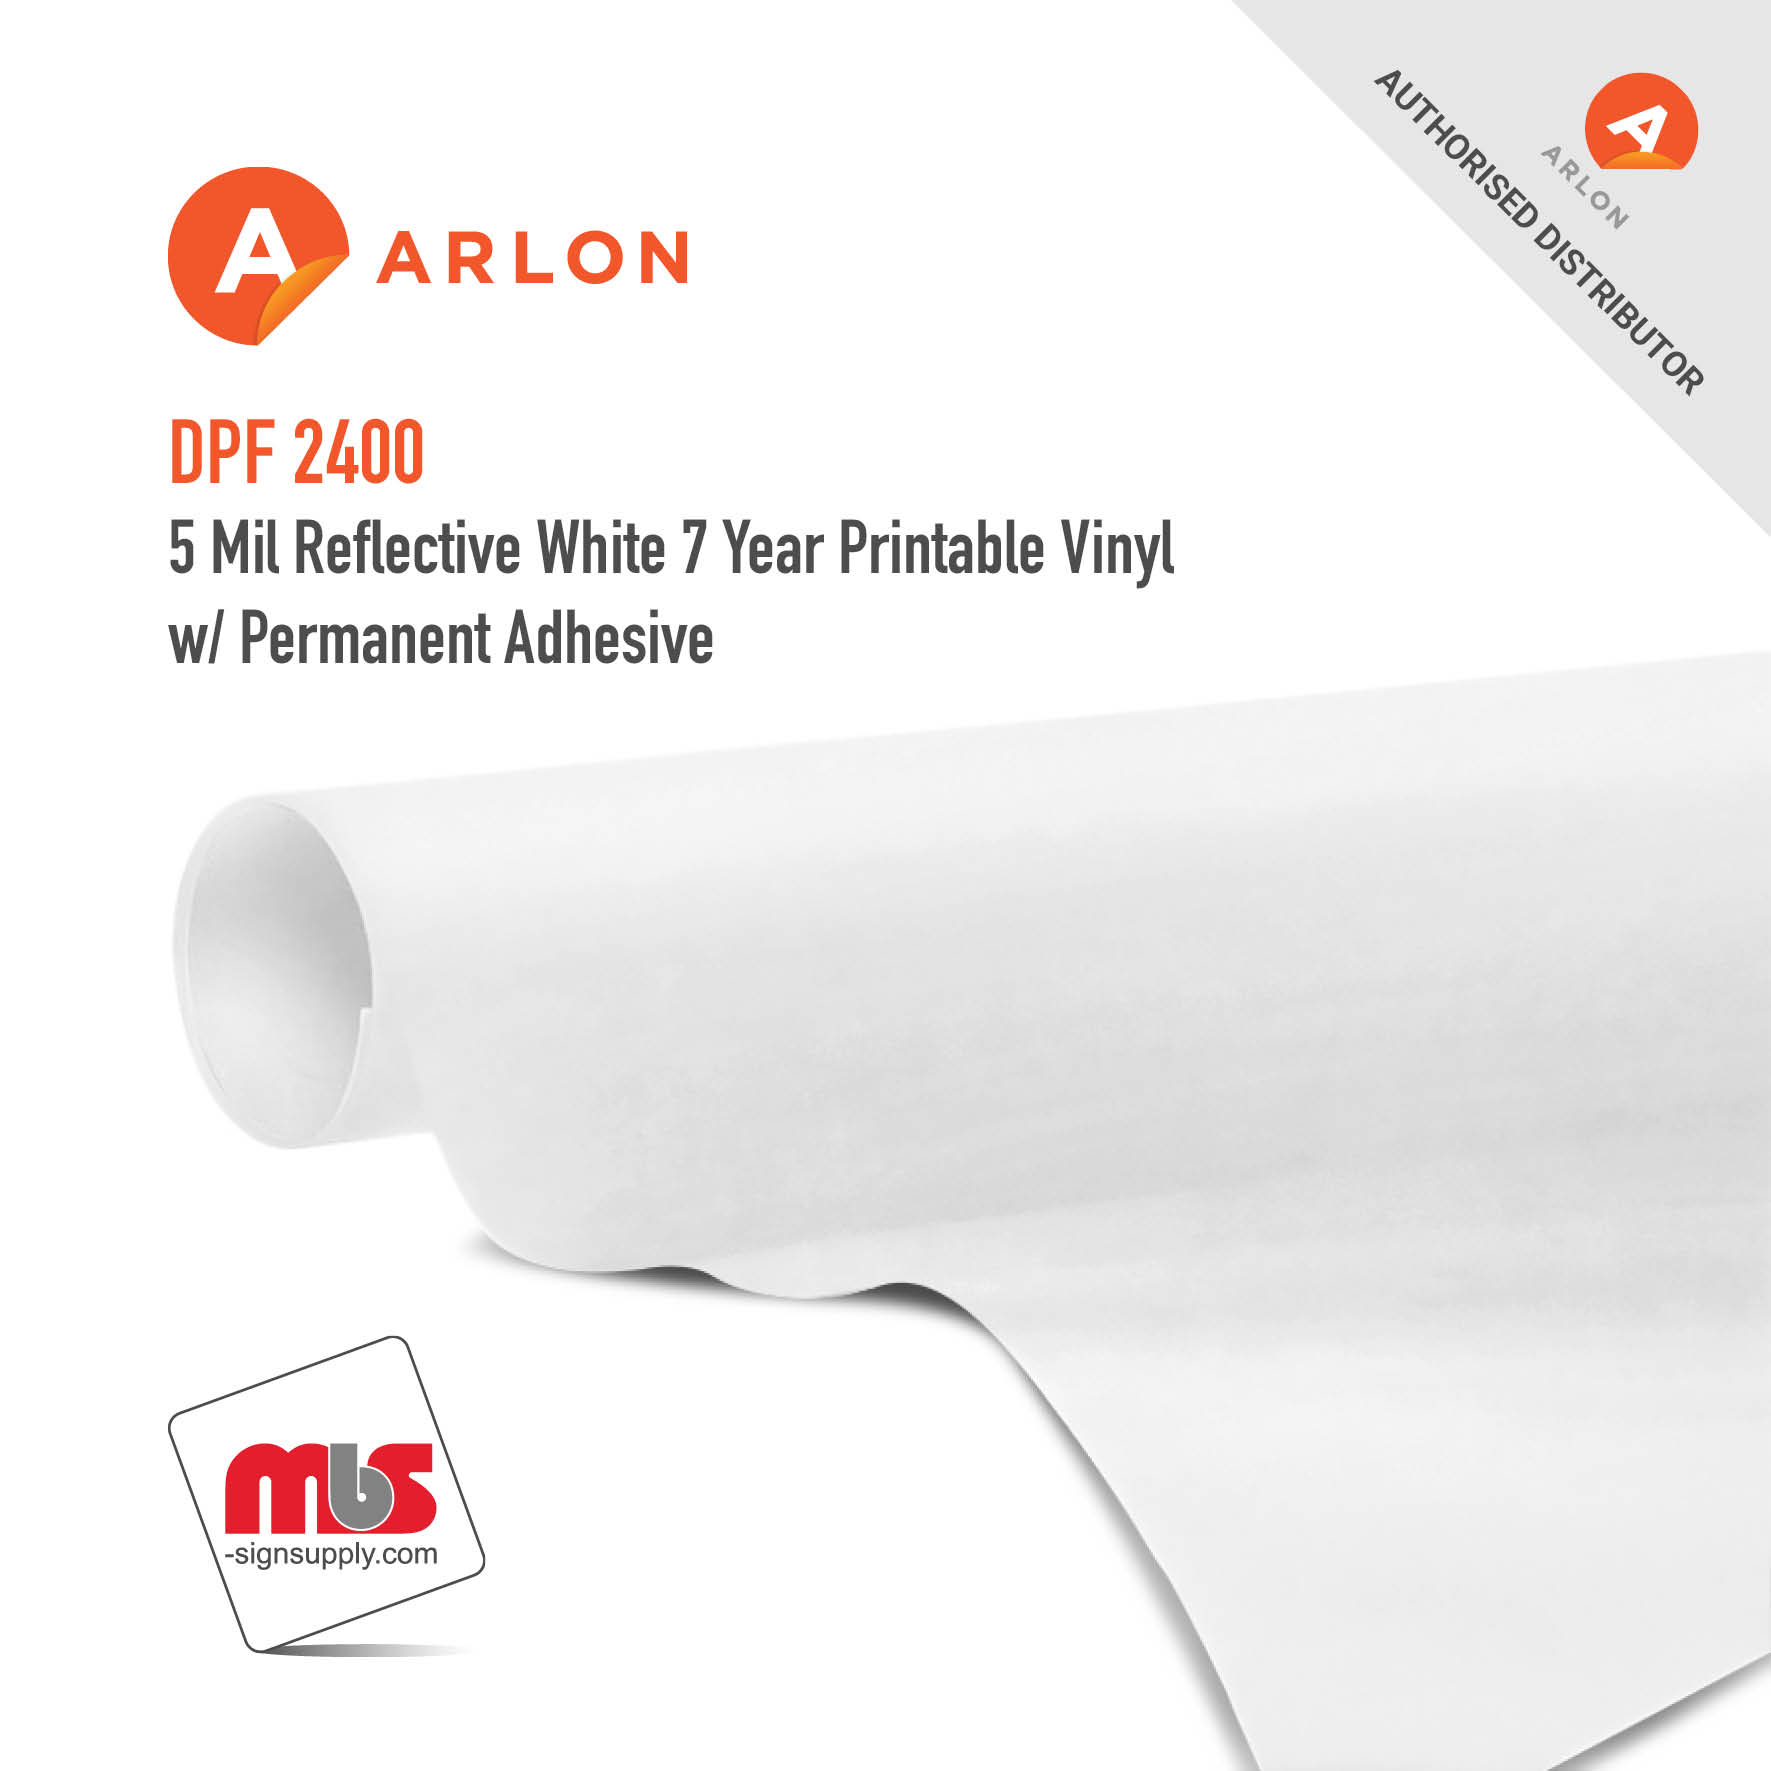 48'' x 50 Yard Roll - Arlon DPF 2400 5 Mil Reflective White 7 Year Printable Vinyl w/ Permanent Adhesive